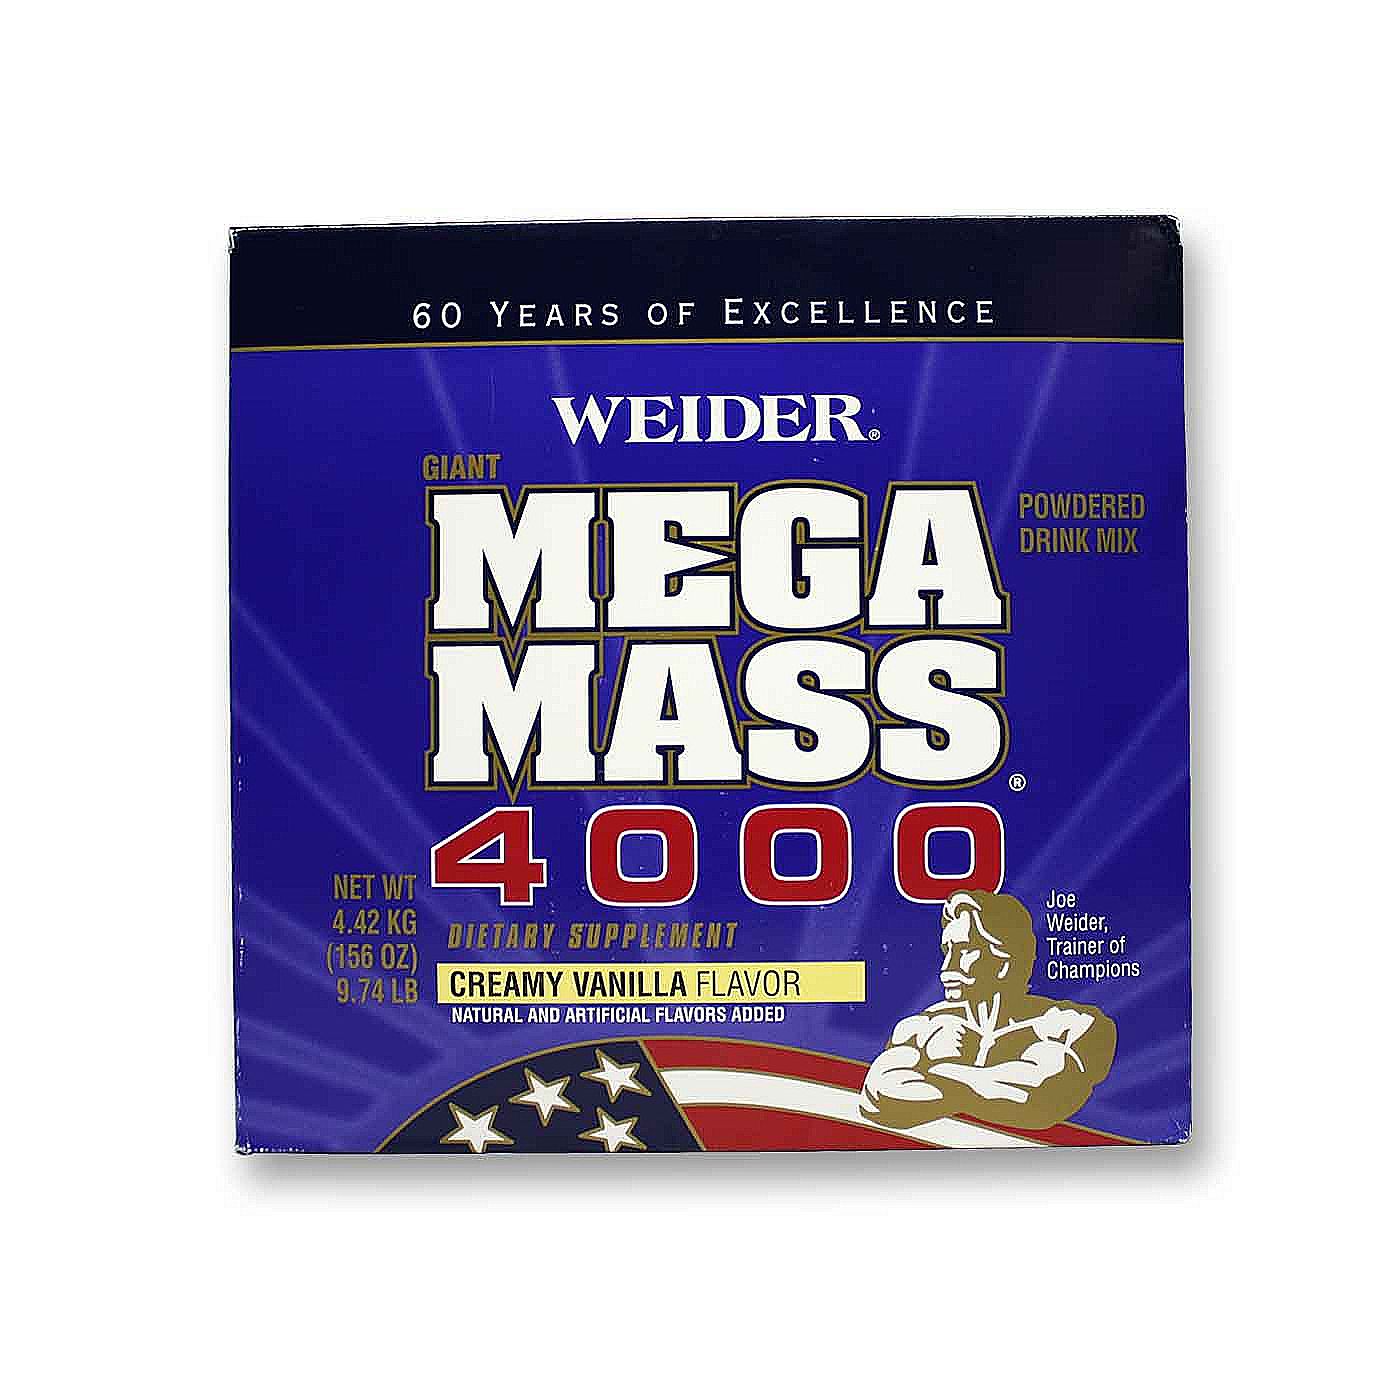 Weider Giant Mega Mass 4000, Creamy Vanilla - 9.77 lbs 